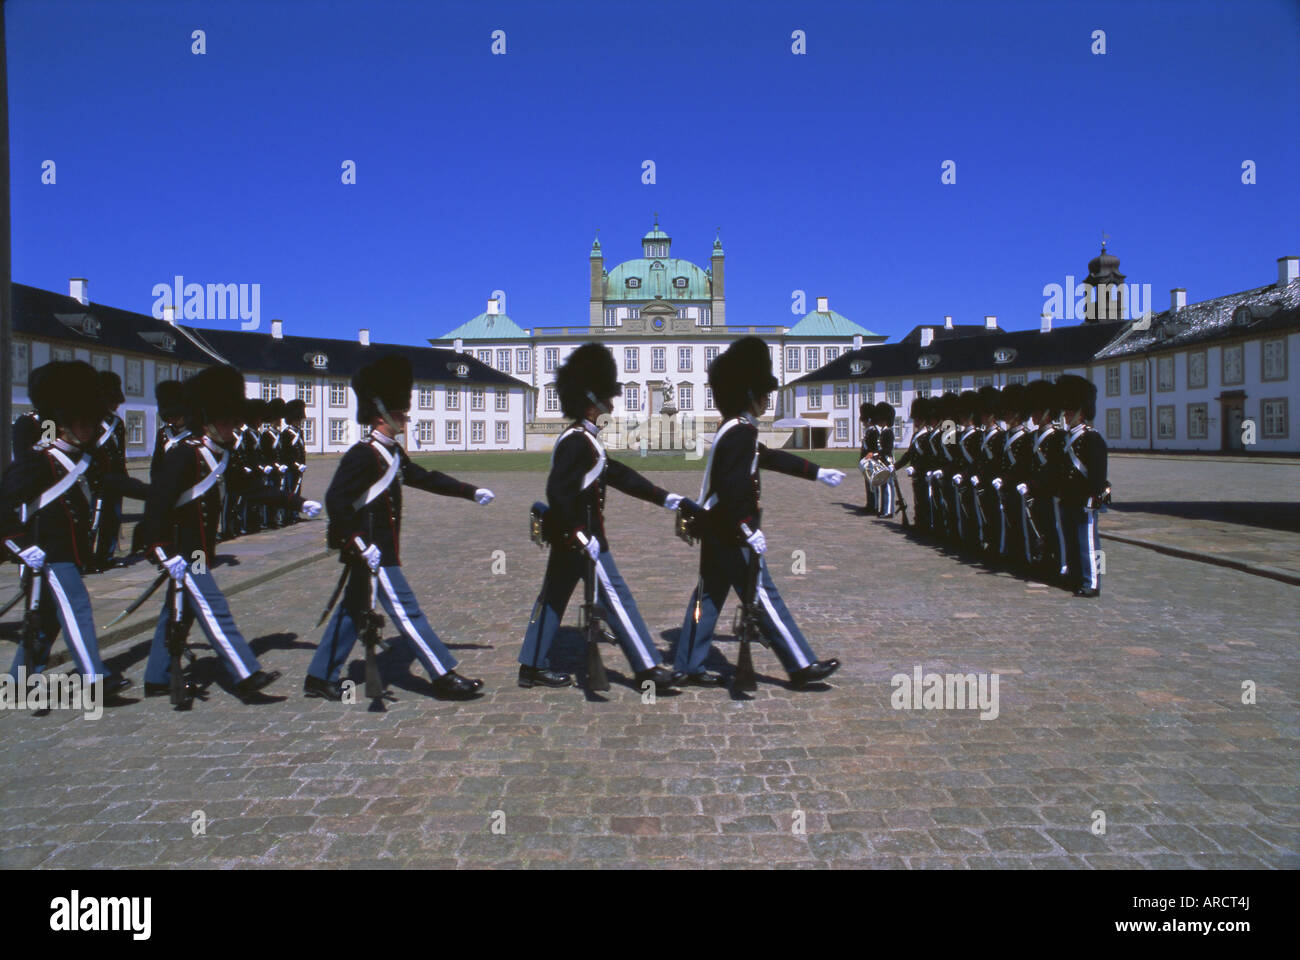 Changing the guards, Royal Palace, Fredericksburg Frederiksborg Slot), Denmark, Scandinavia, Europe Stock Photo